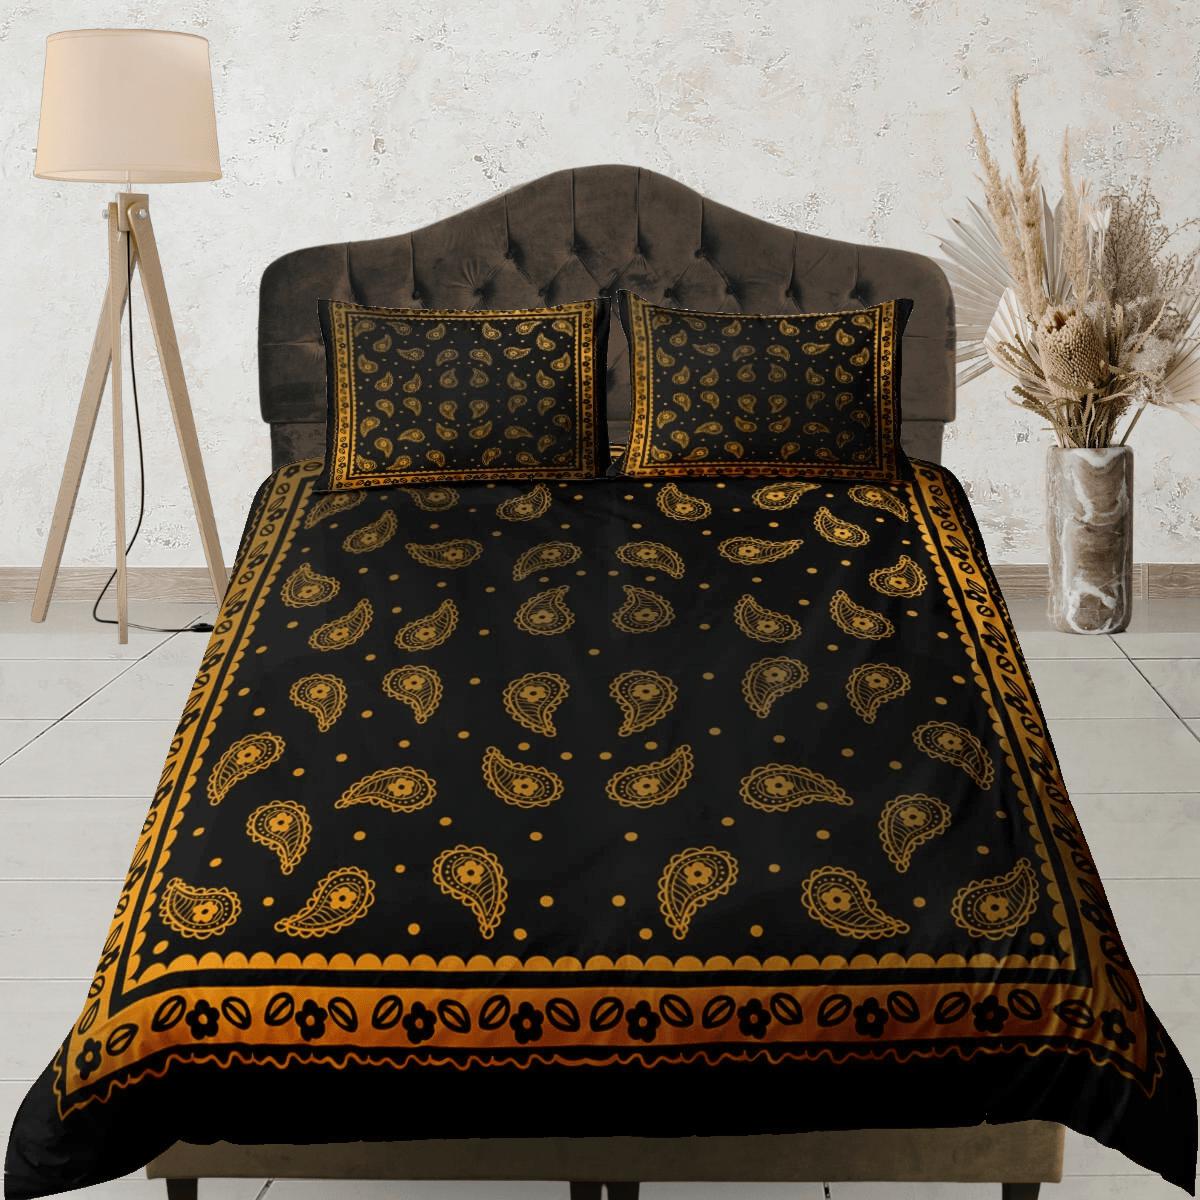 daintyduvet Black orange bandana paisley duvet cover set, aesthetic room decor bedding set full, king, queen size, abstract boho bedspread, luxury cover